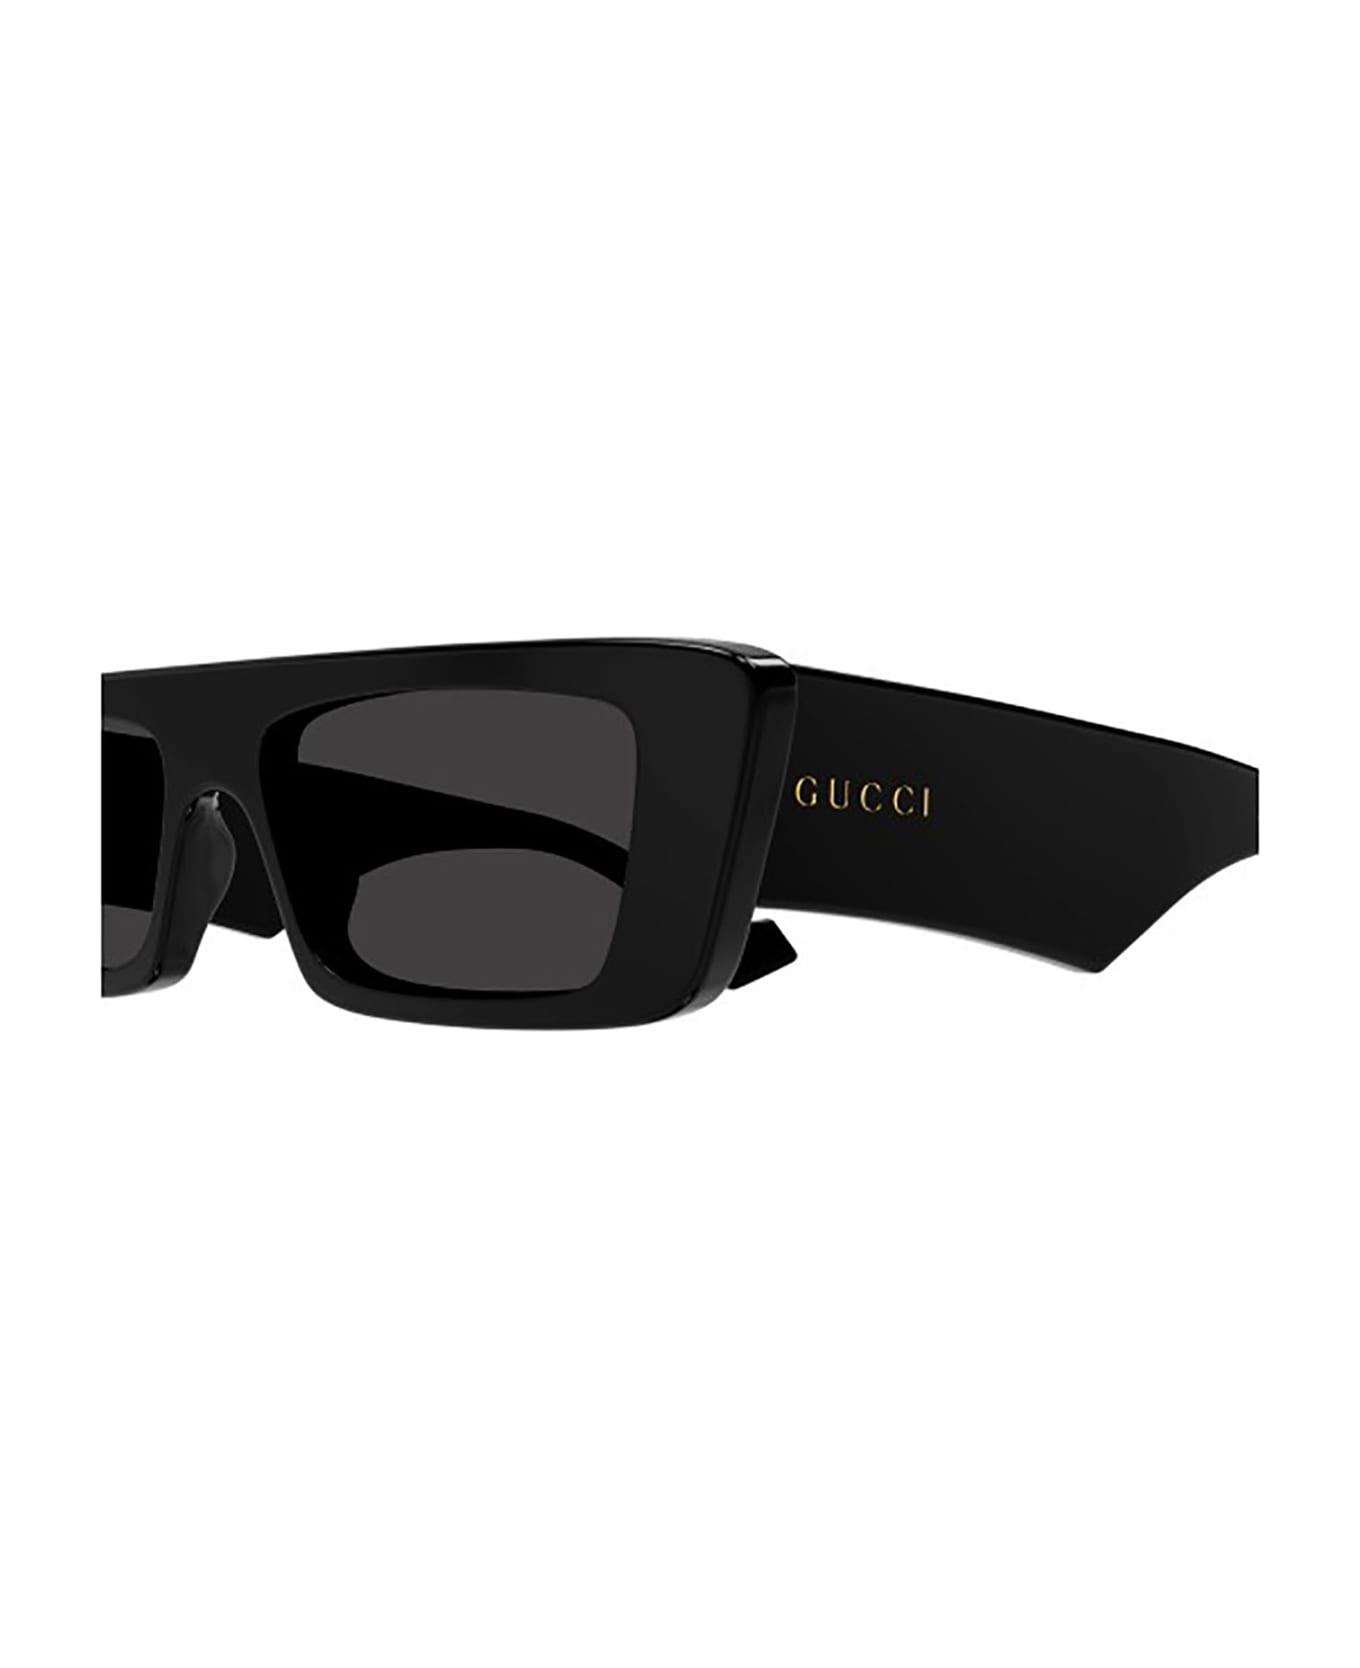 Gucci Eyewear Gg1331s Sunglasses - 002 black black brown